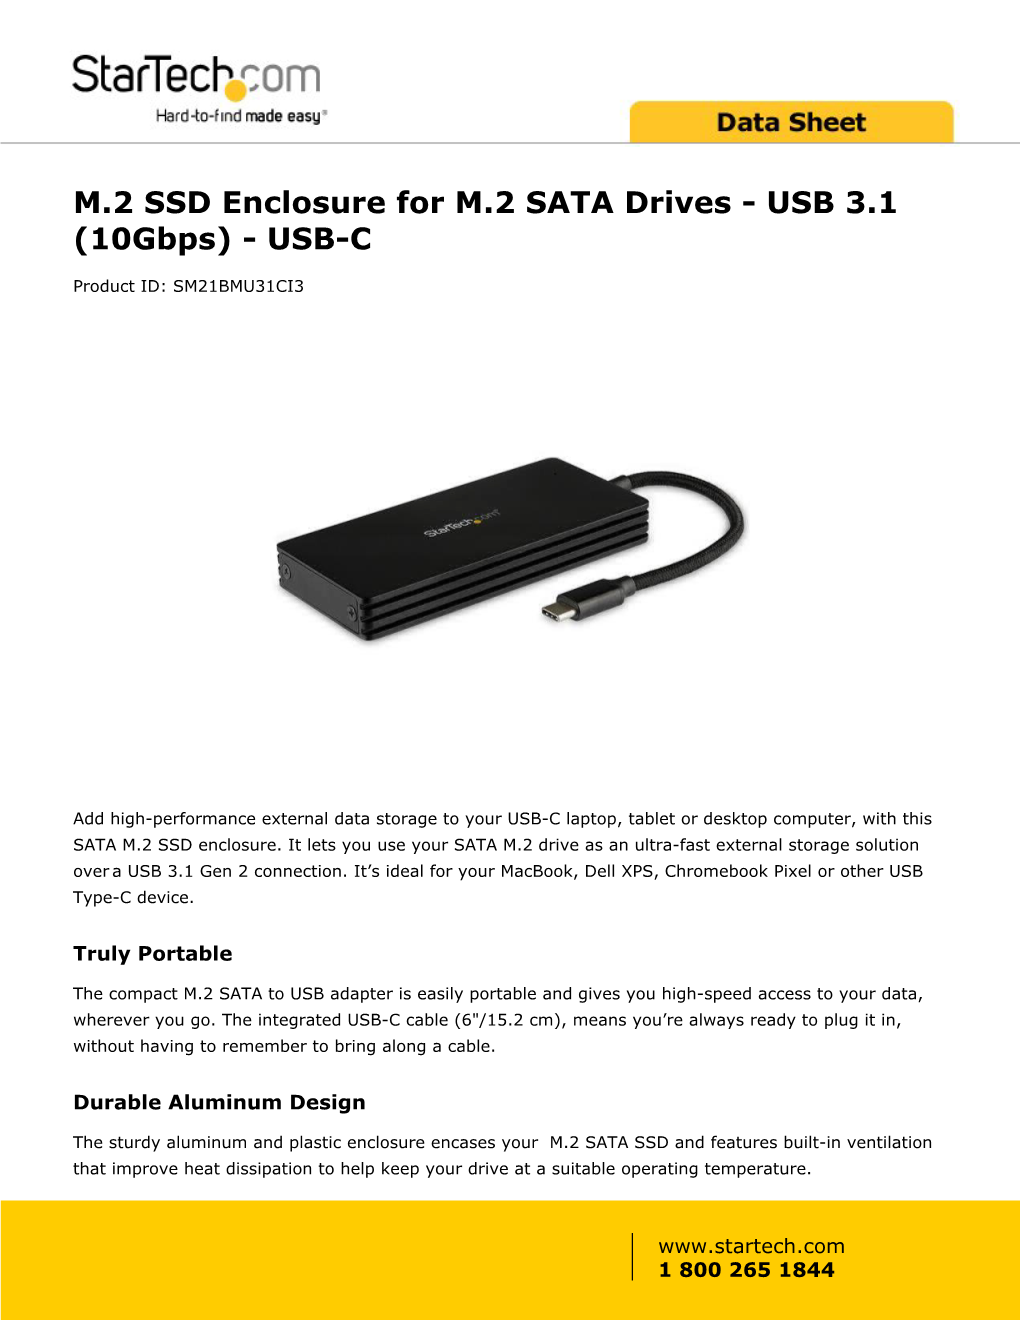 USB 3.1 (10Gbps) - USB-C